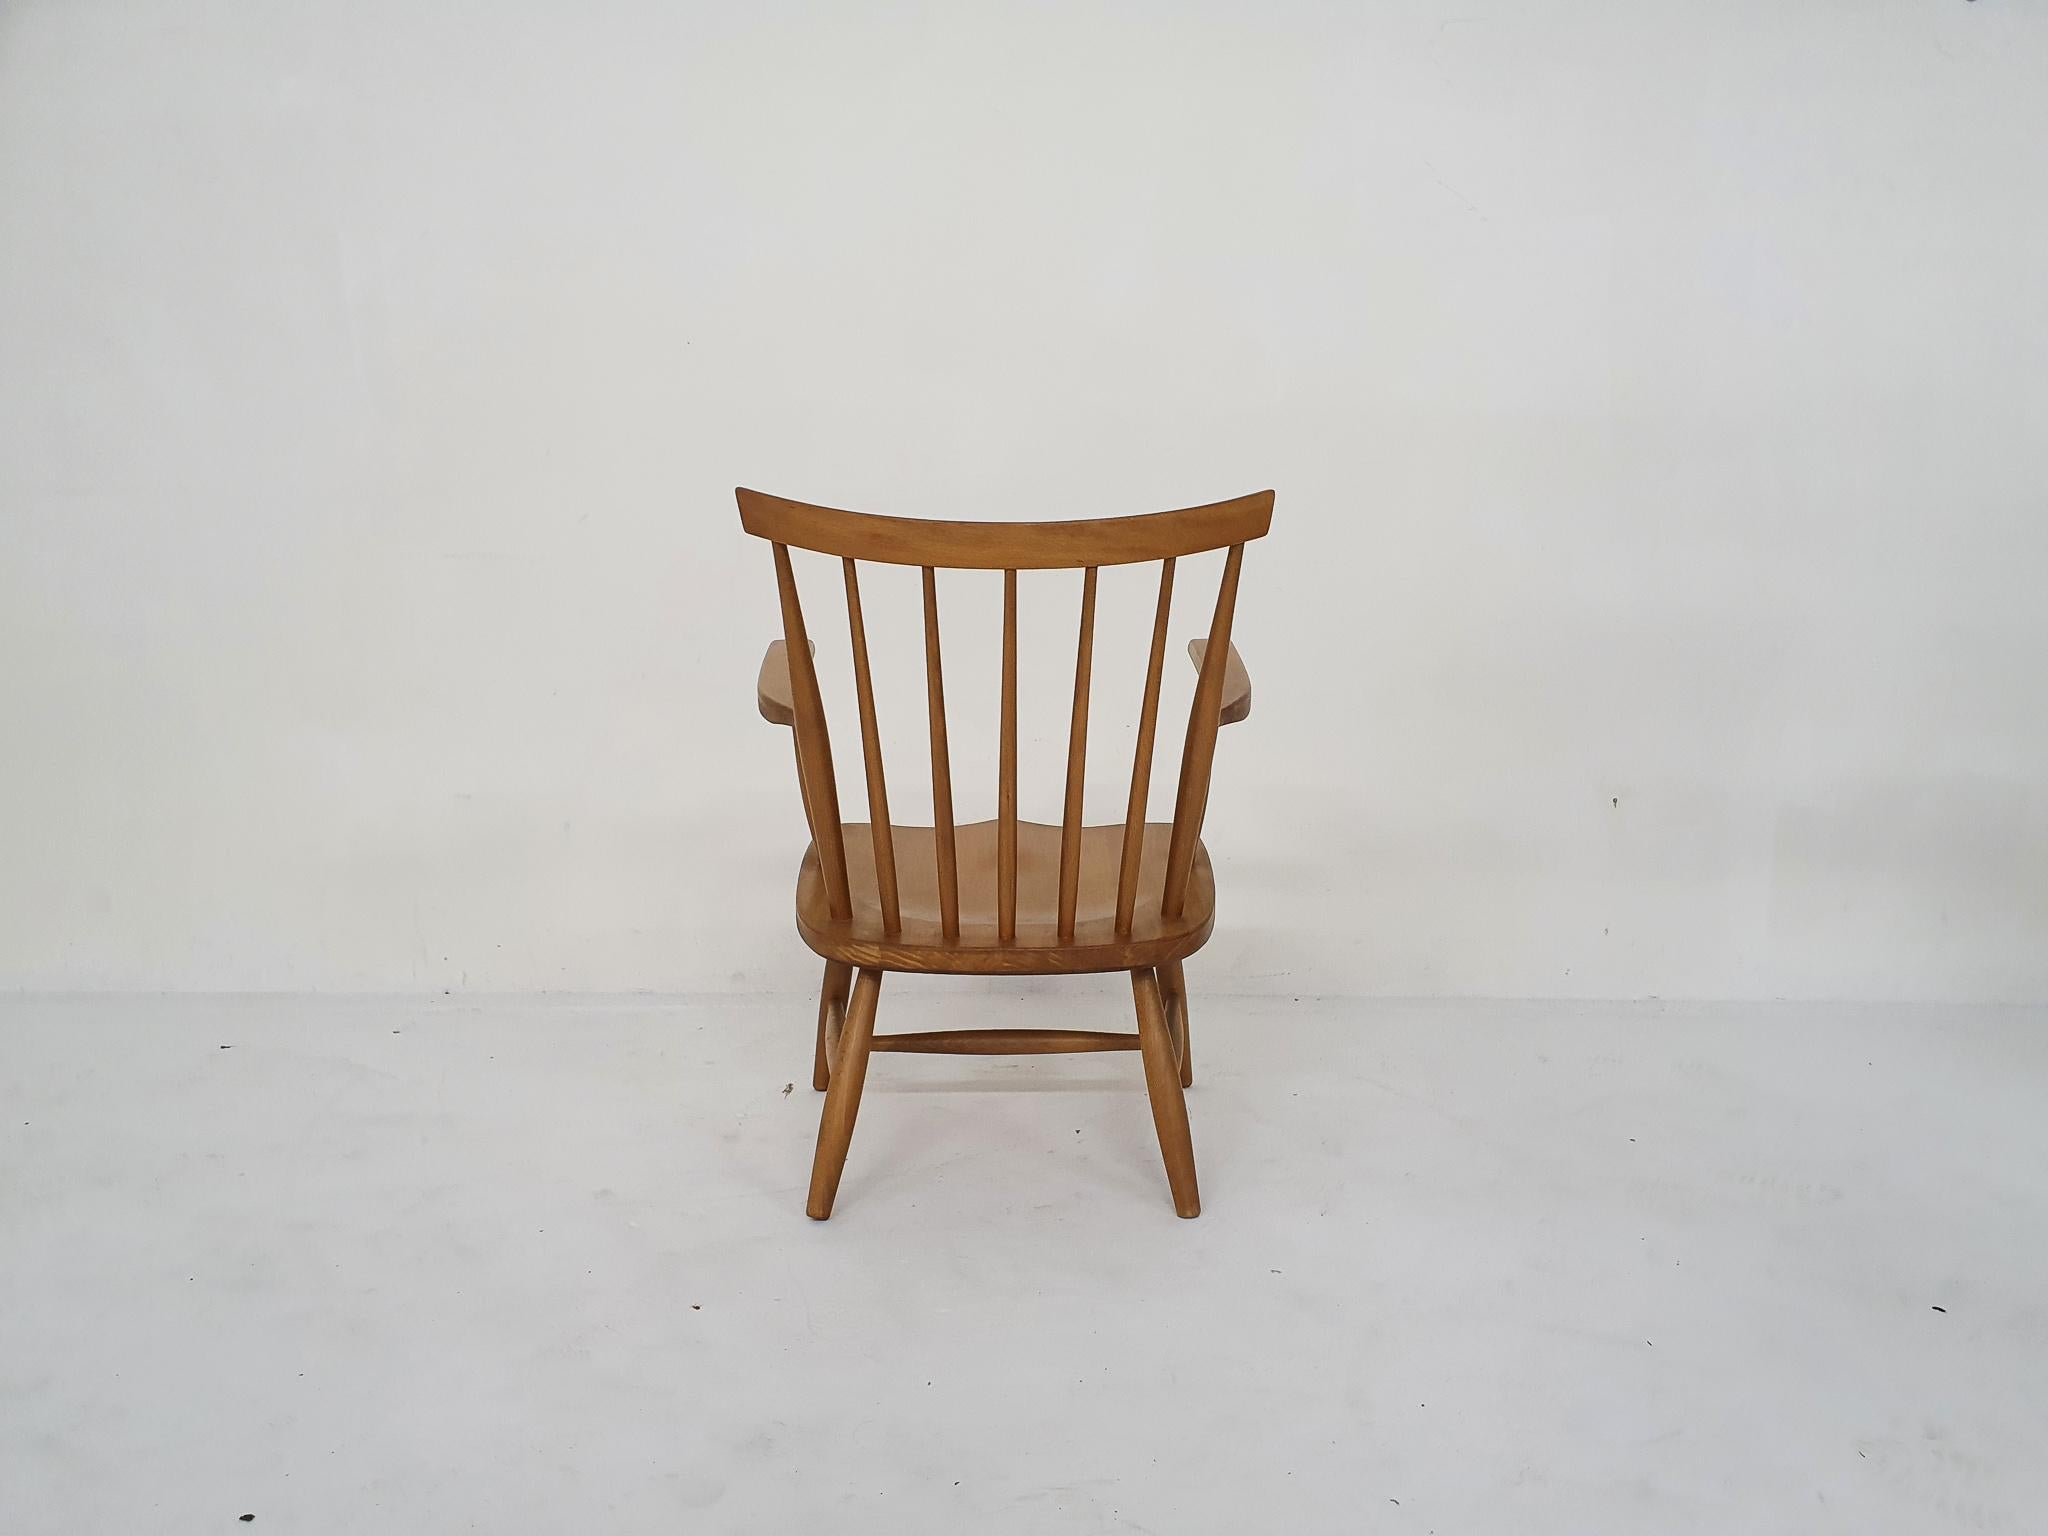 Scandinavian Modern Mid-Century Modern Spindle Back Arm Chair, by Gelderland, the Netherlands 1960's For Sale